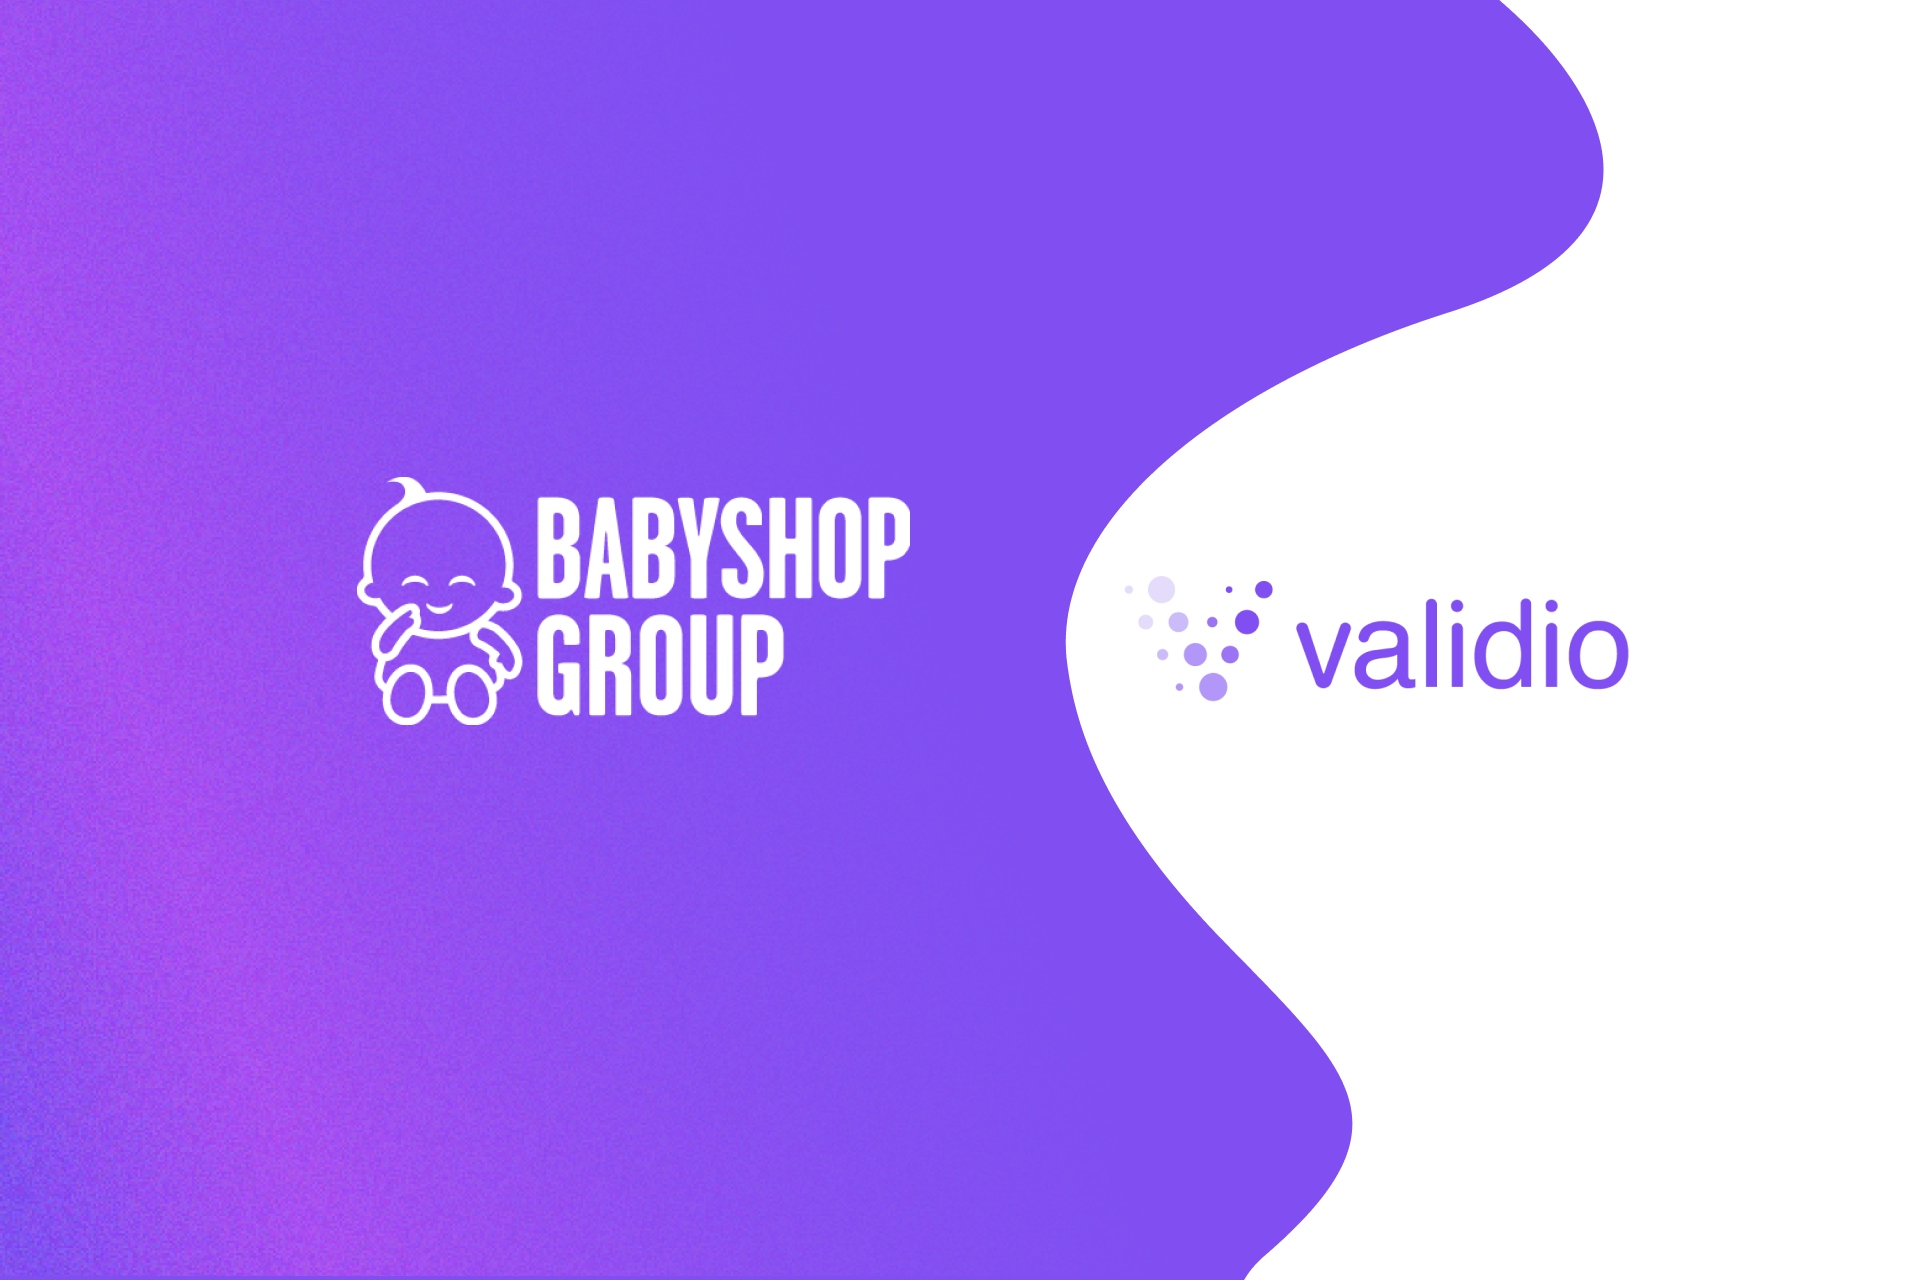 Babyshop and Validio logo